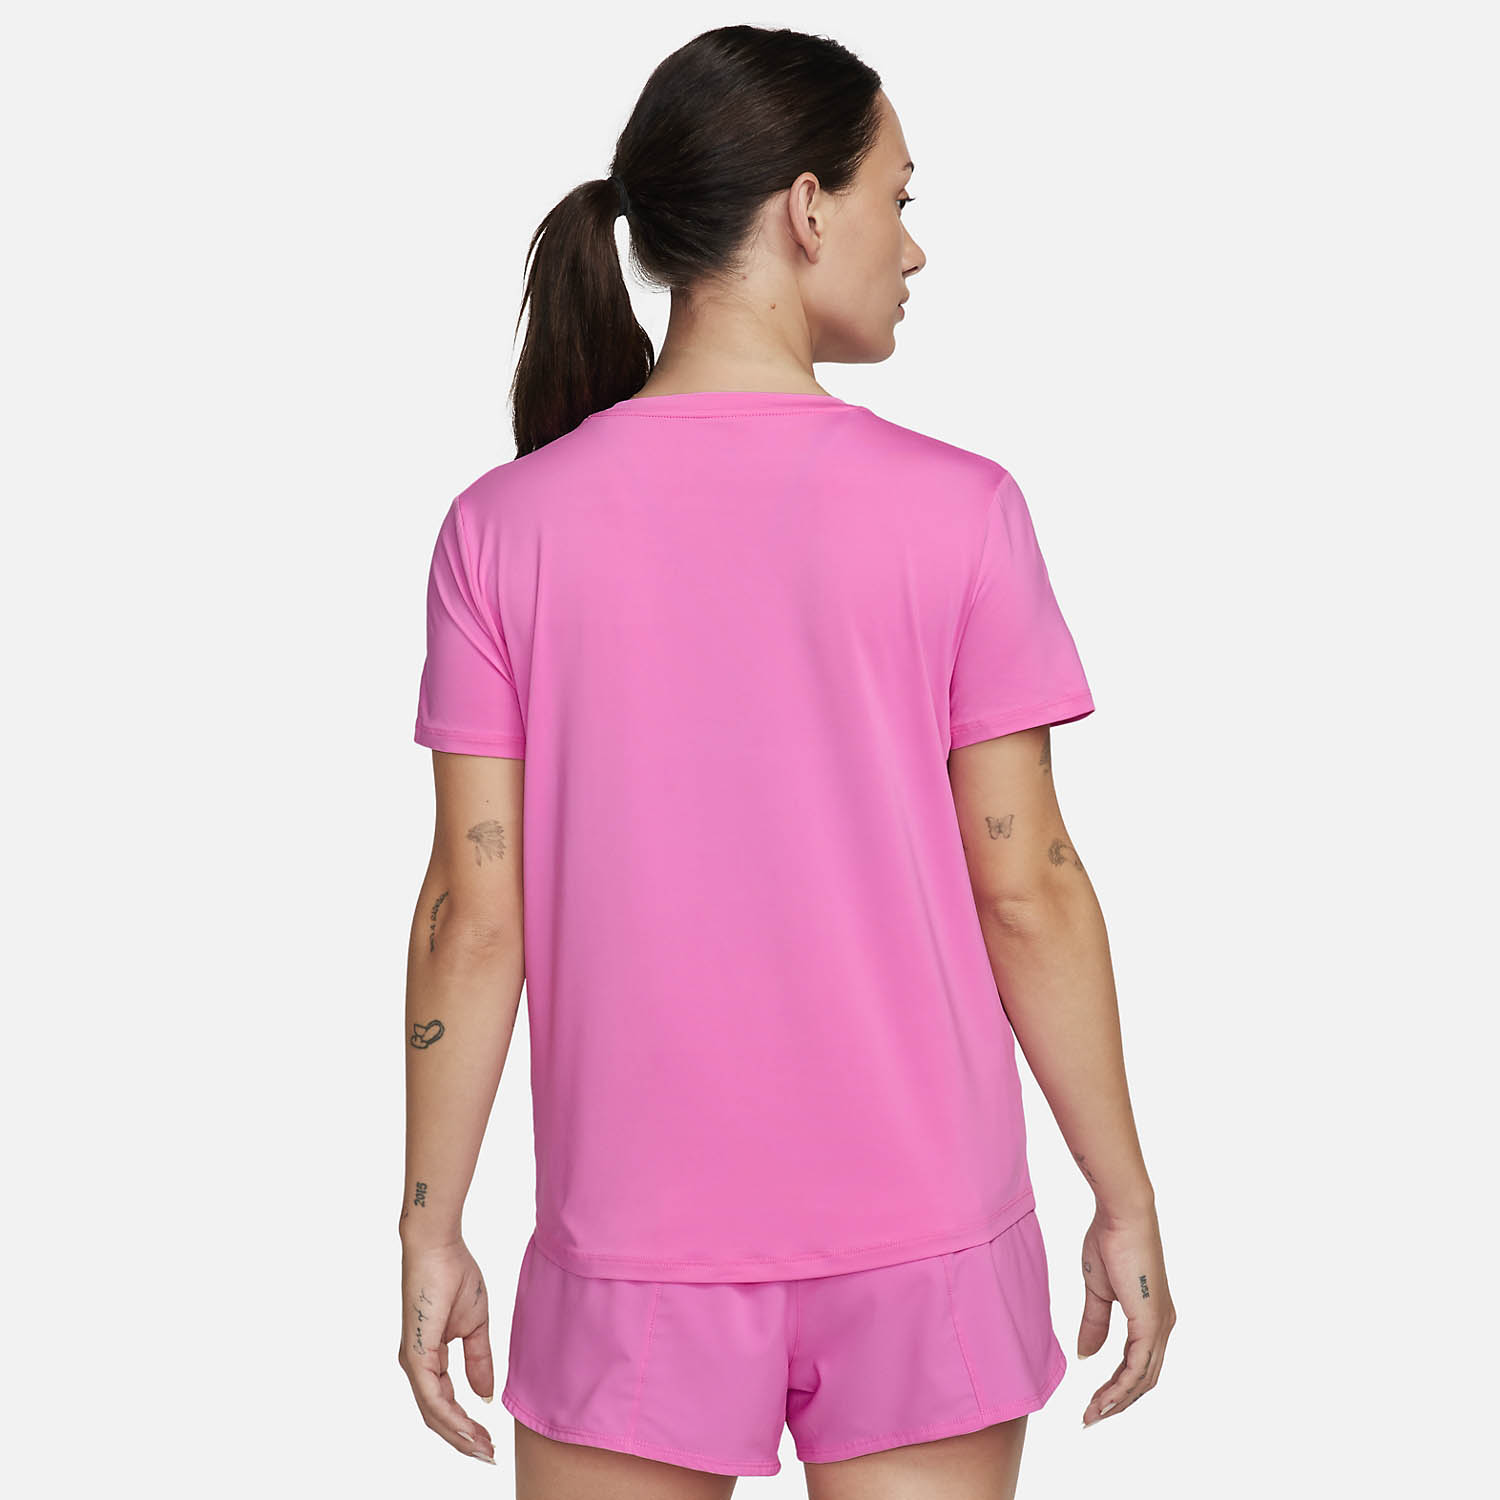 Nike One Classic T-Shirt - Playful Pink/Black